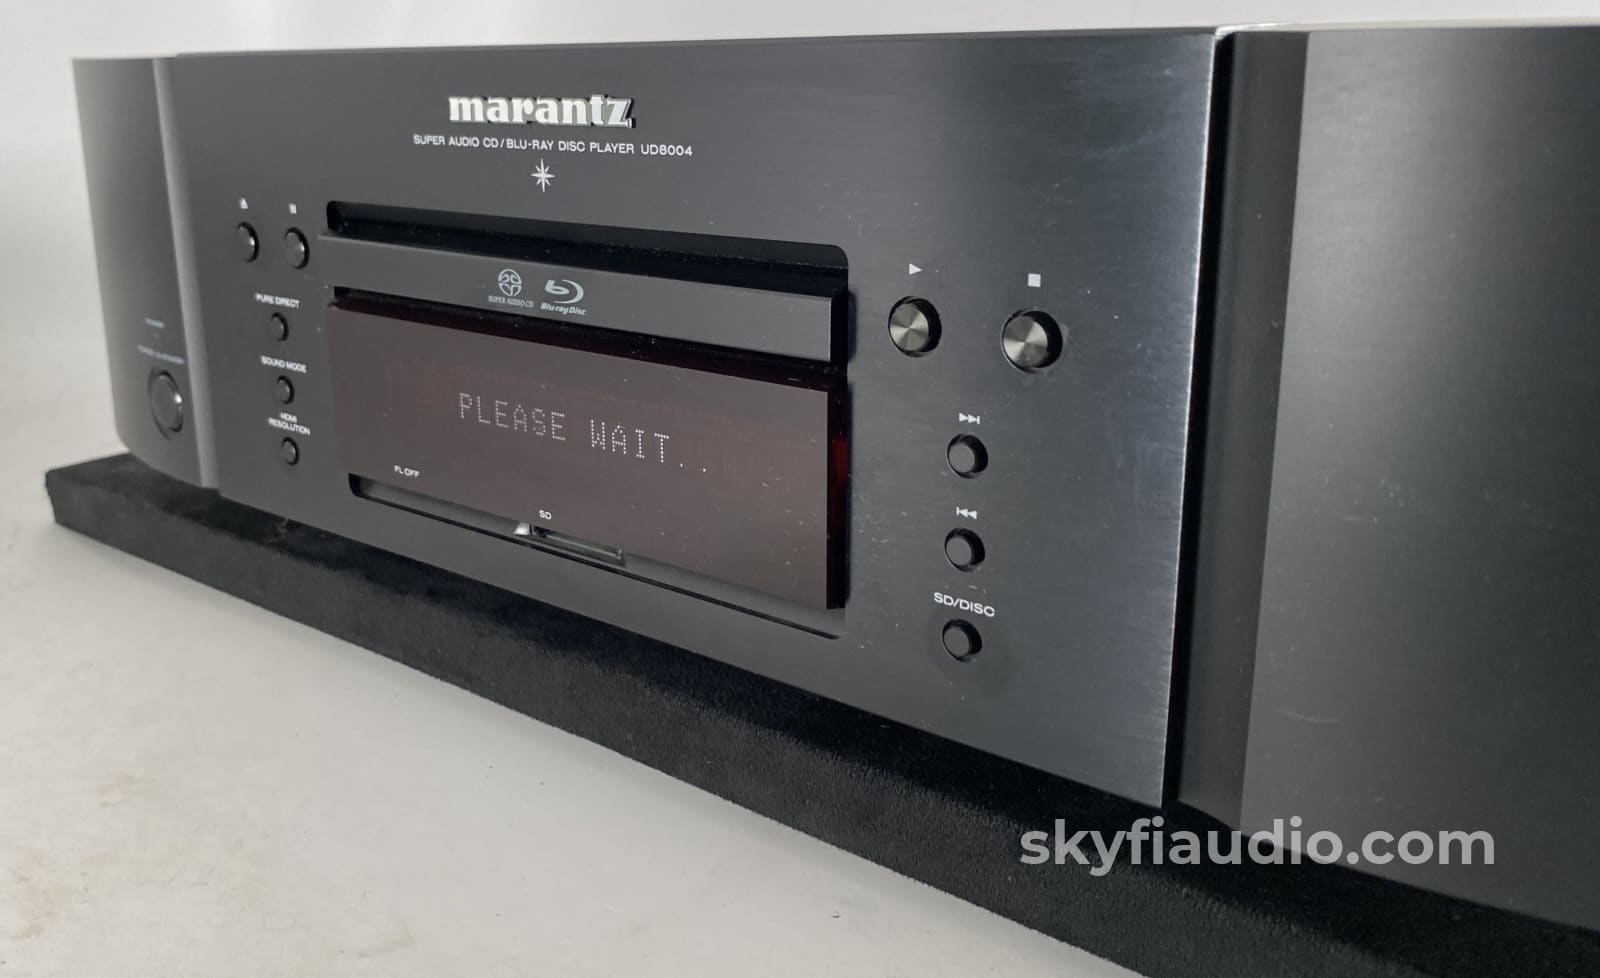 Marantz UD8004 Universal SACD/CD/DVD-A/DVD/Blu-Ray Player